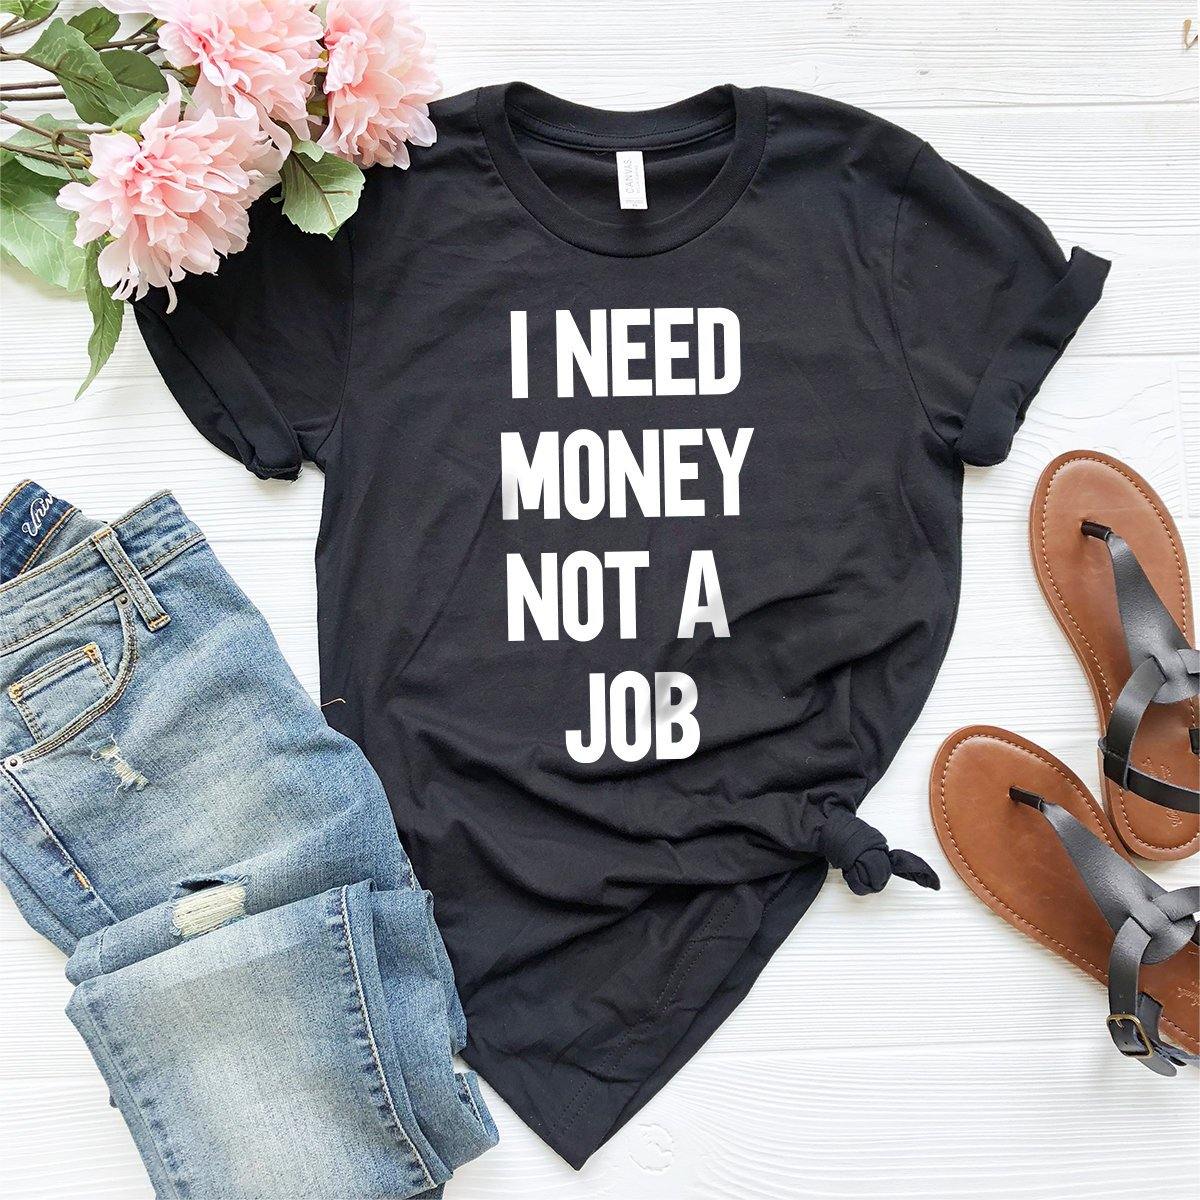 I Need Money Not A Job Shirt, Humorous Saying Tee, Humor T-Shirt, Funny Women Shirt, Tumbler Shirt, Hipster T-Shirt, Funny Quote Shirt - Fastdeliverytees.com